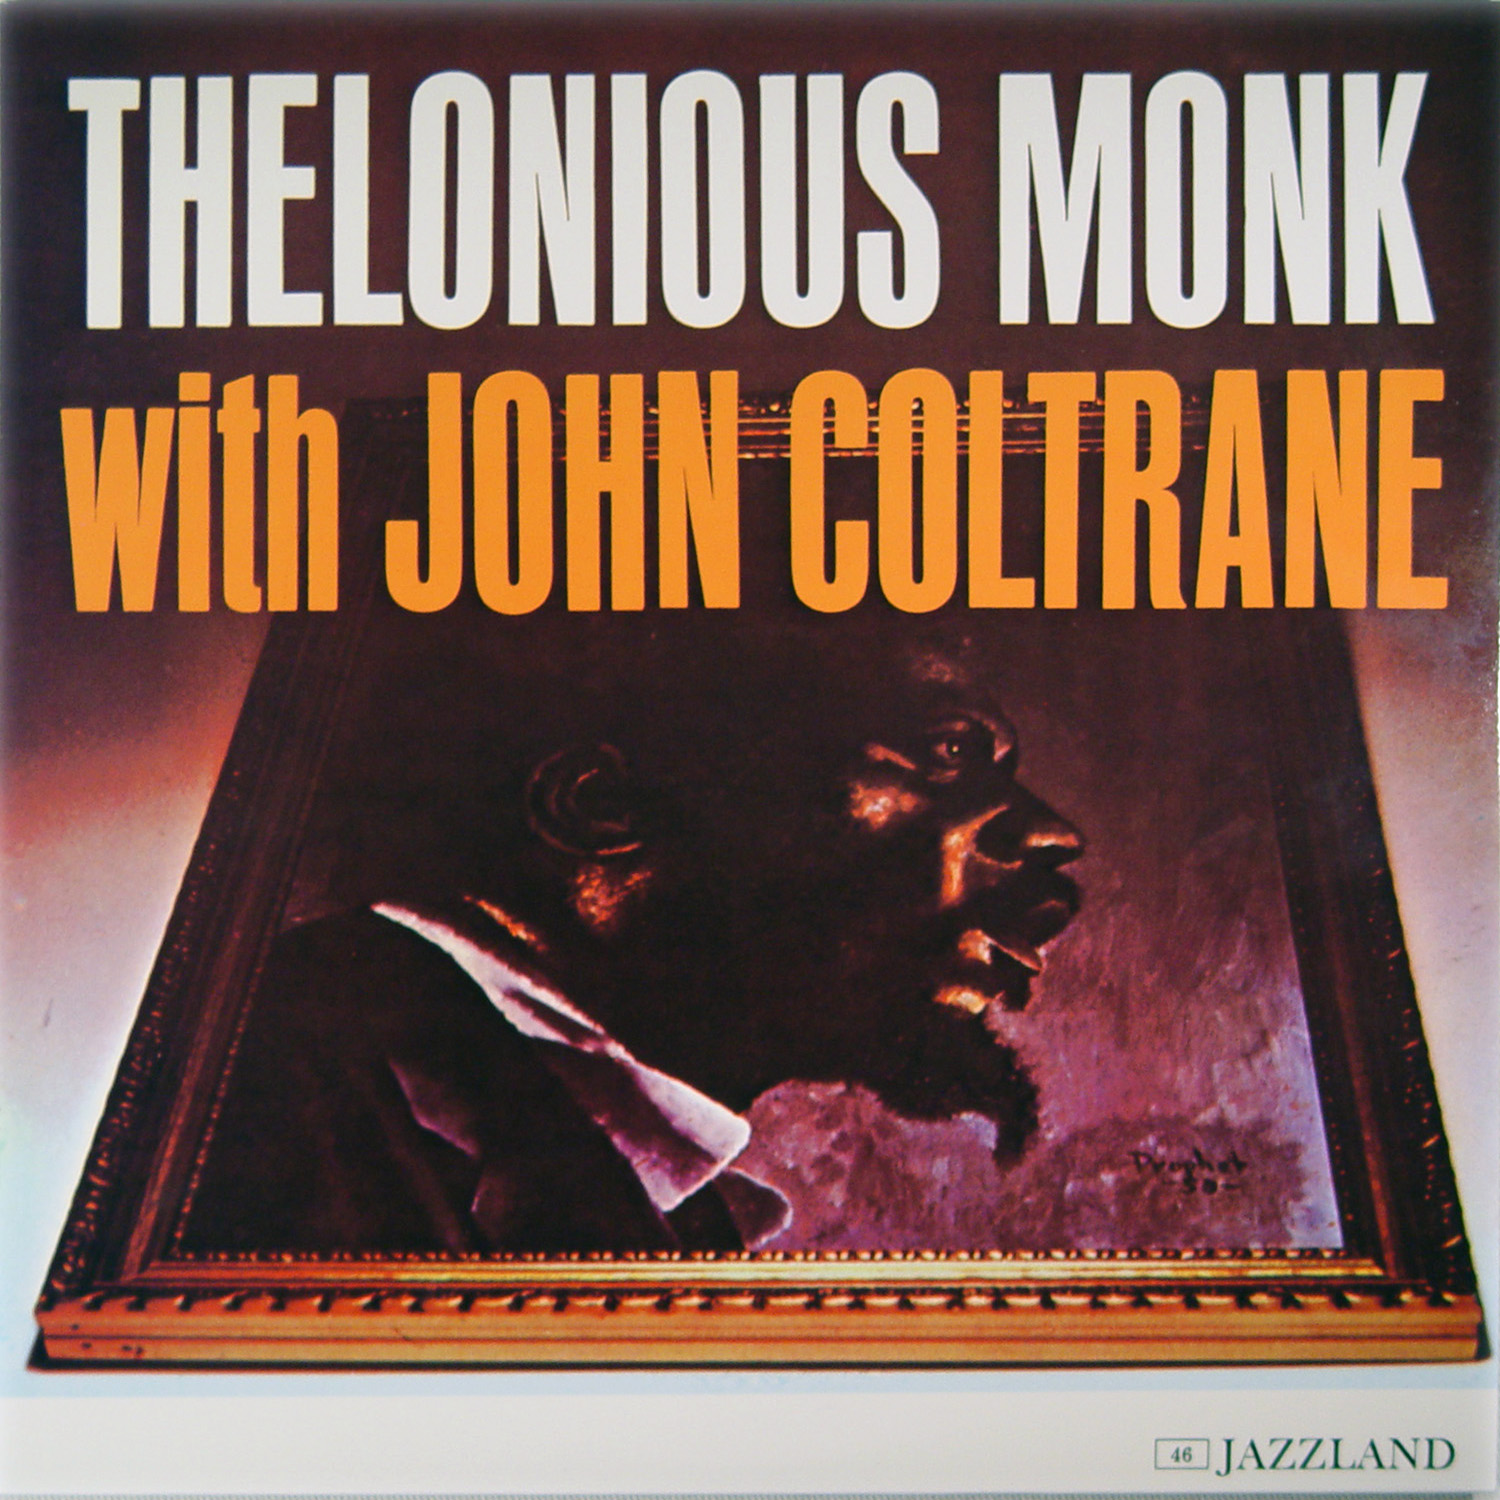 Thelonious Monk with John Coltane (fron)